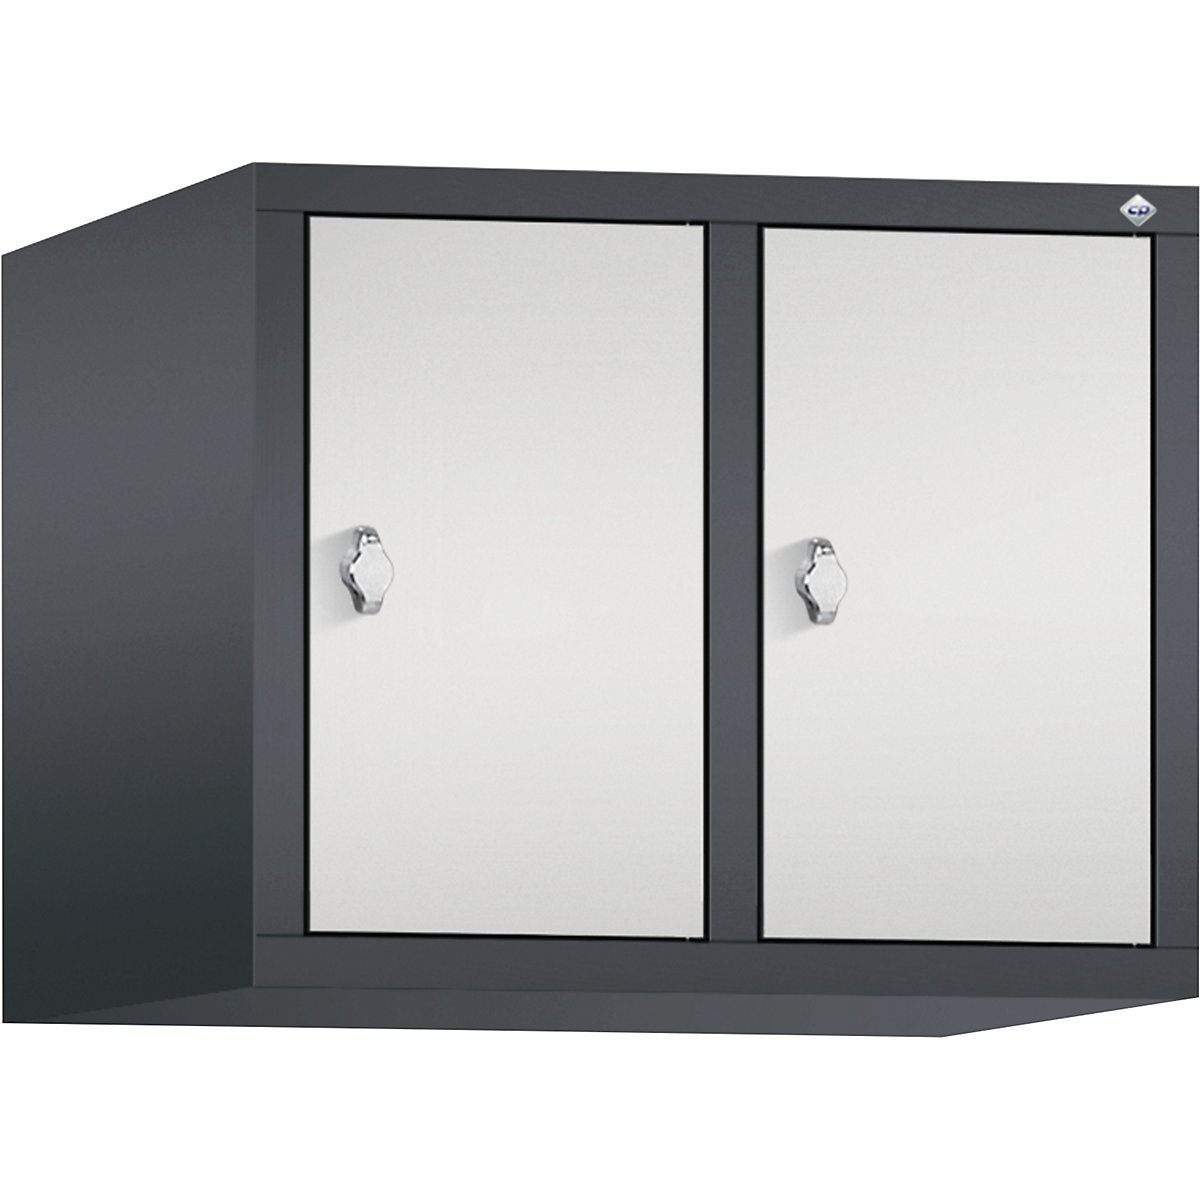 Altillo CLASSIC – C+P, 2 compartimentos, anchura de compartimento 300 mm, gris negruzco / gris luminoso-4